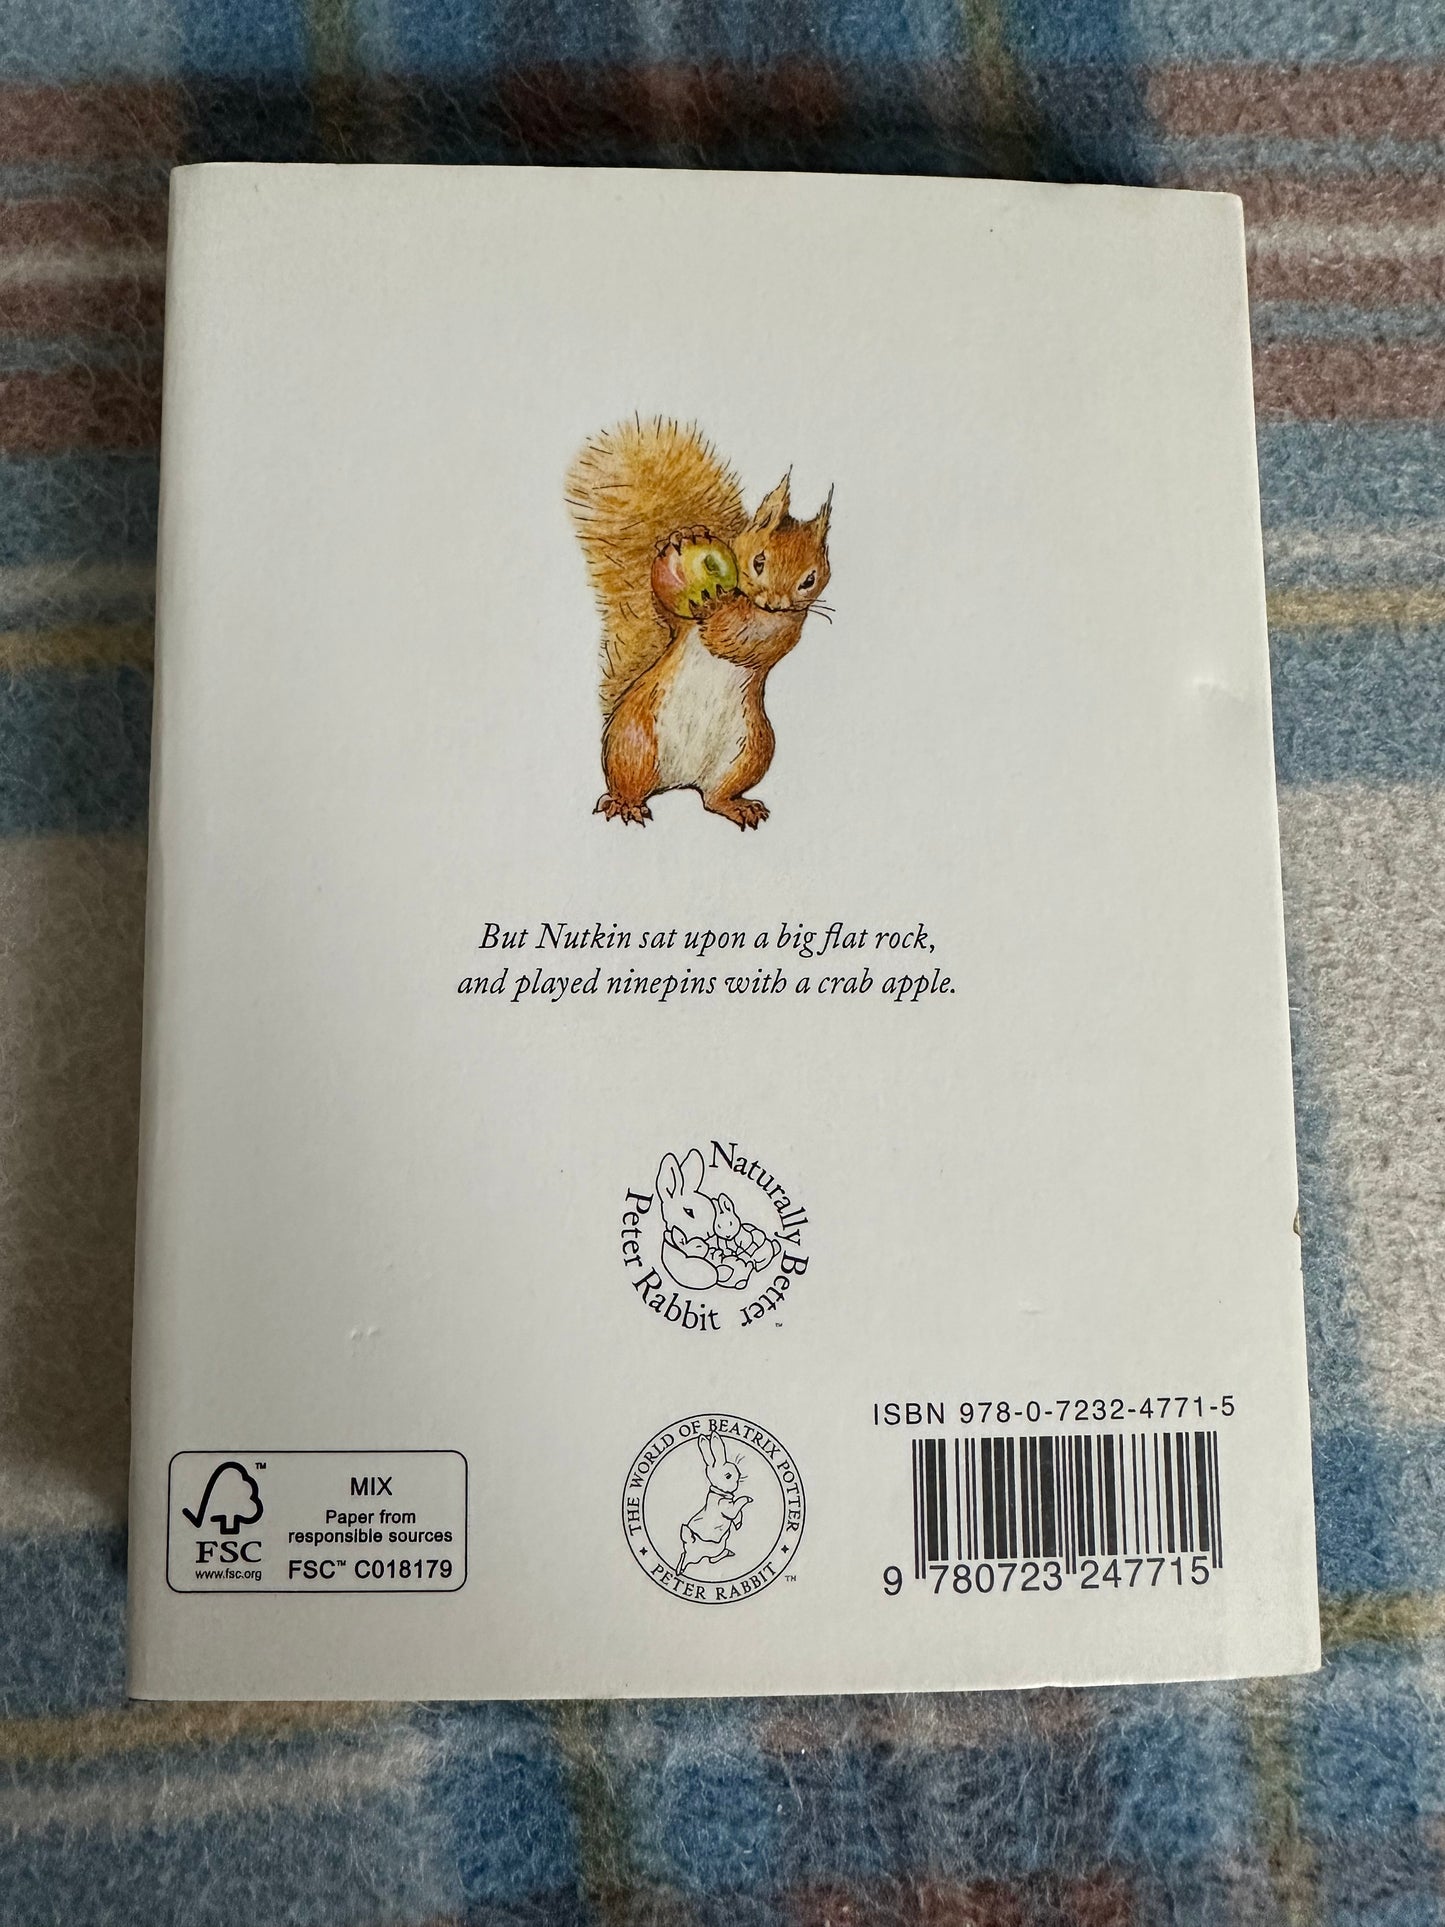 2001 The Tale Of Squirrel Nutkin - Beatrix Potter(Frederick Warne & Co Ltd)